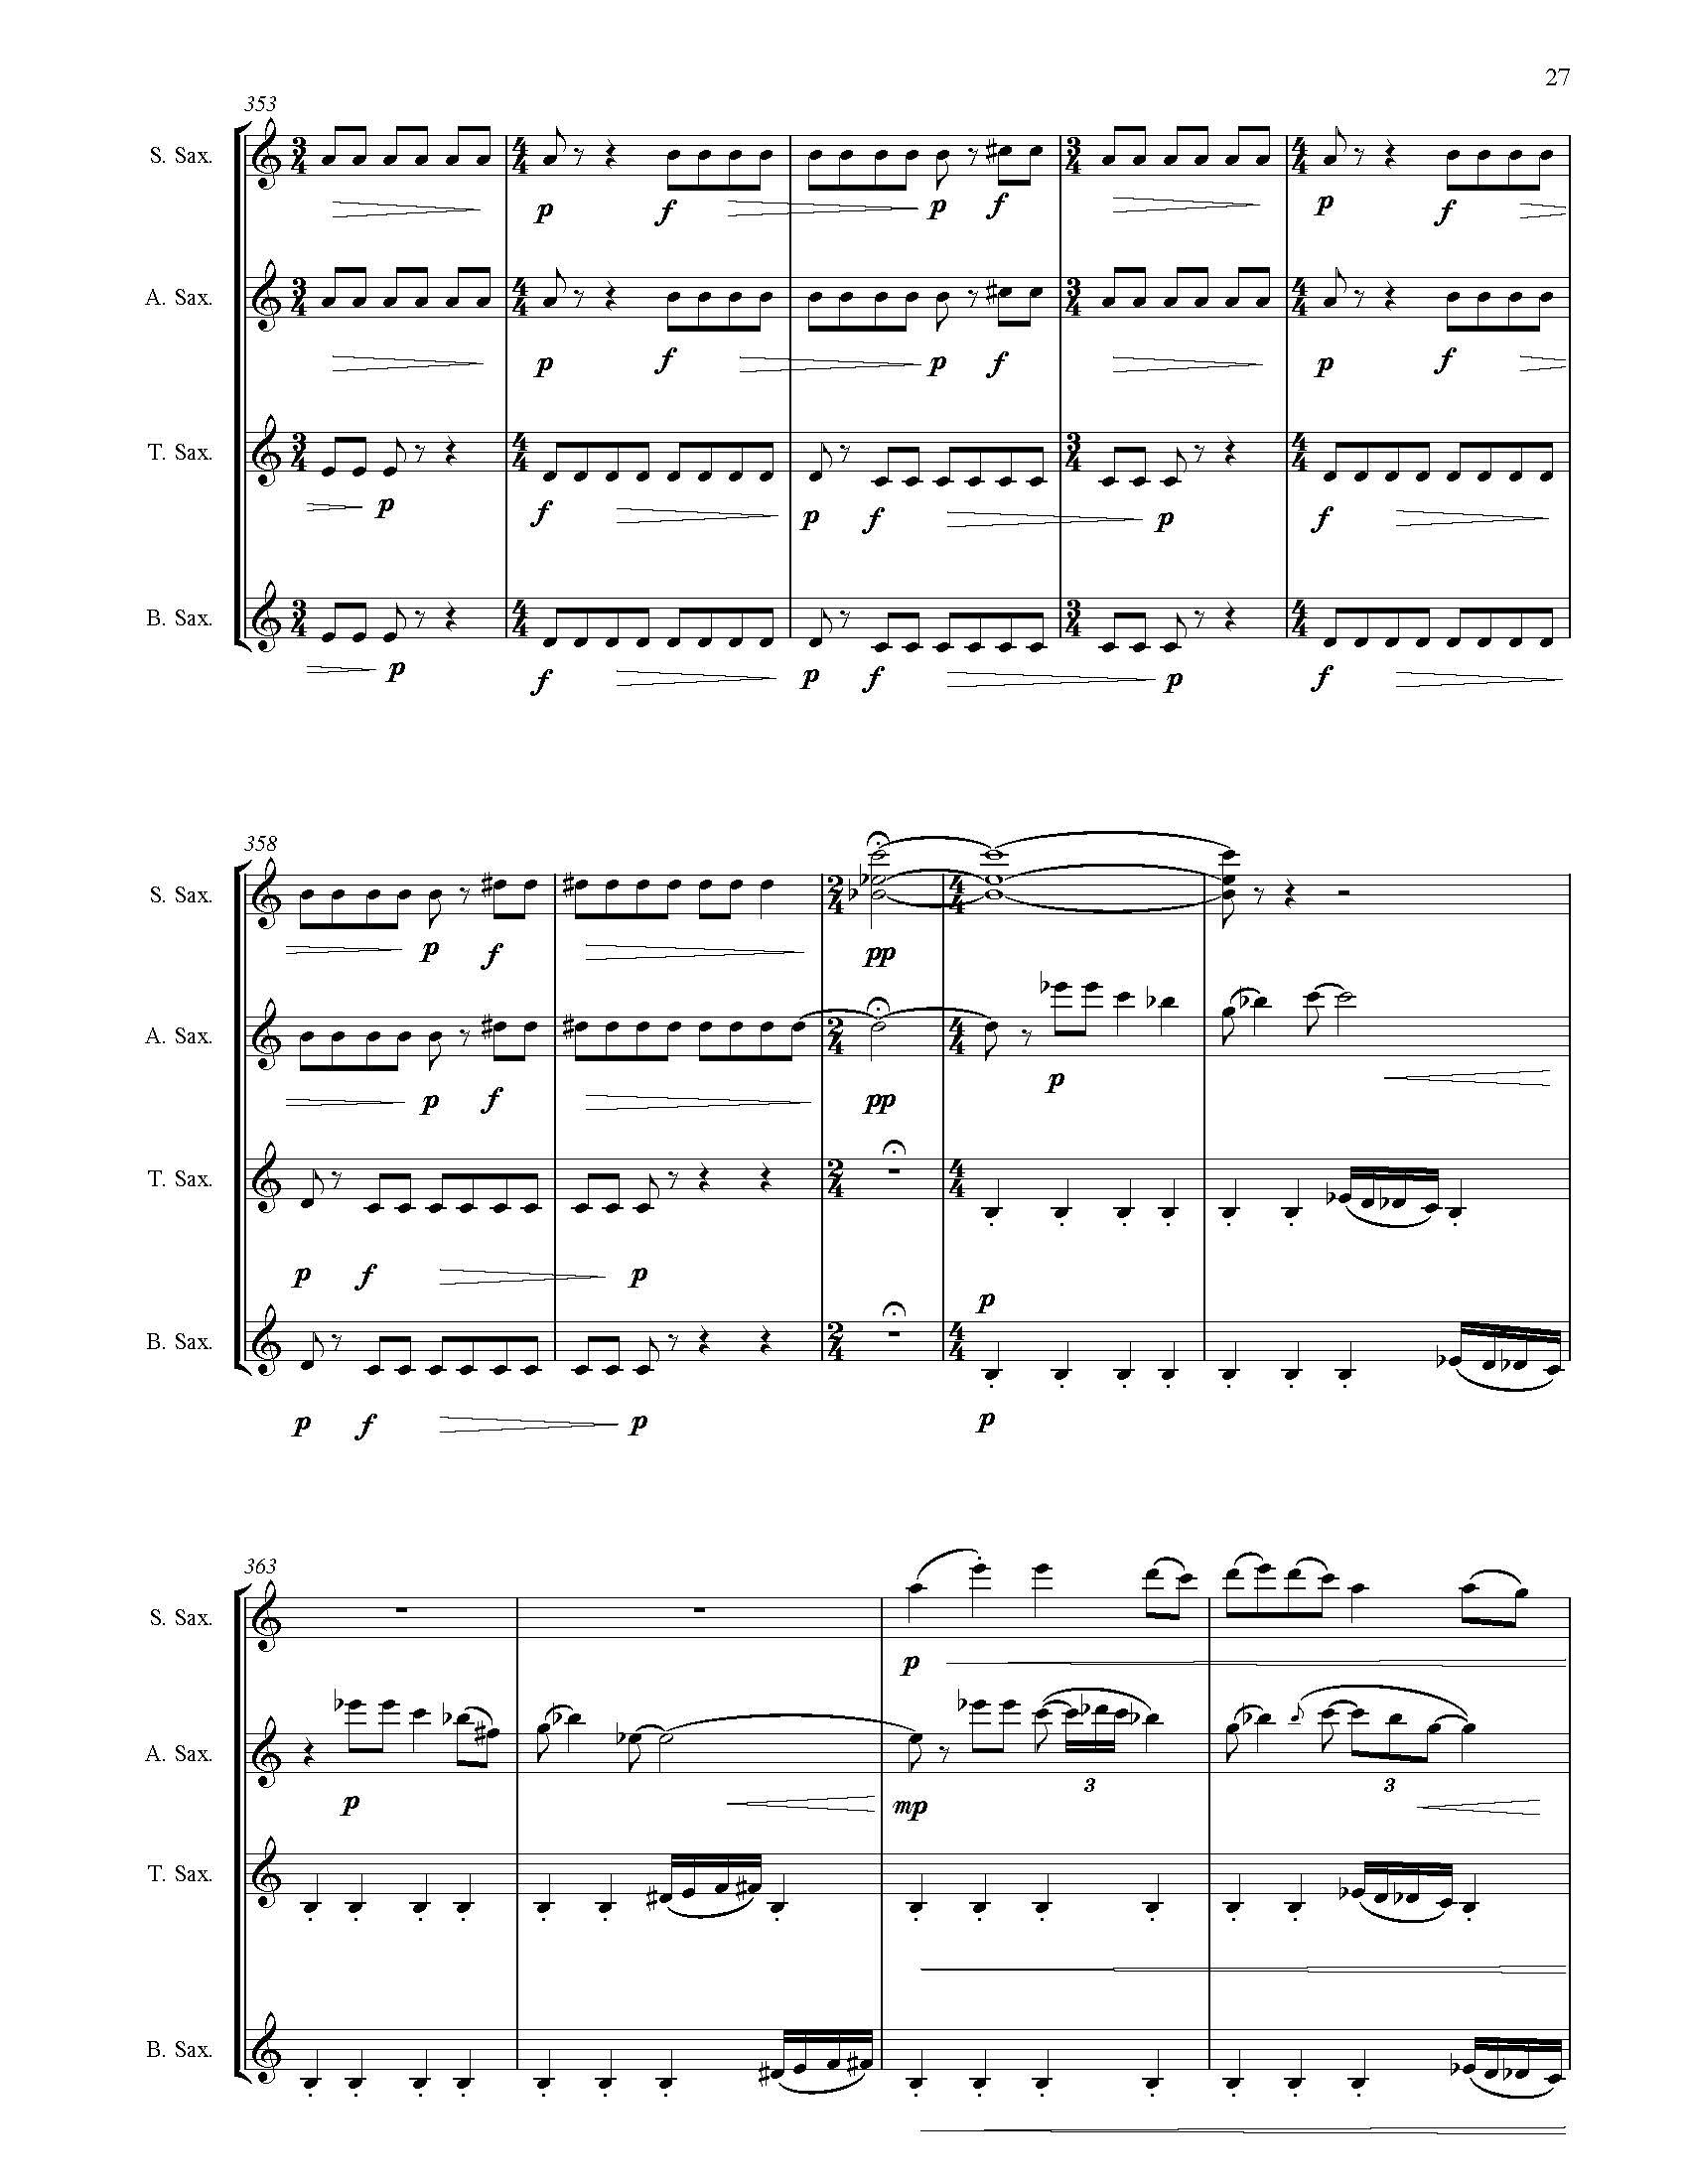 The Revivalist - Complete Score_Page_35.jpg